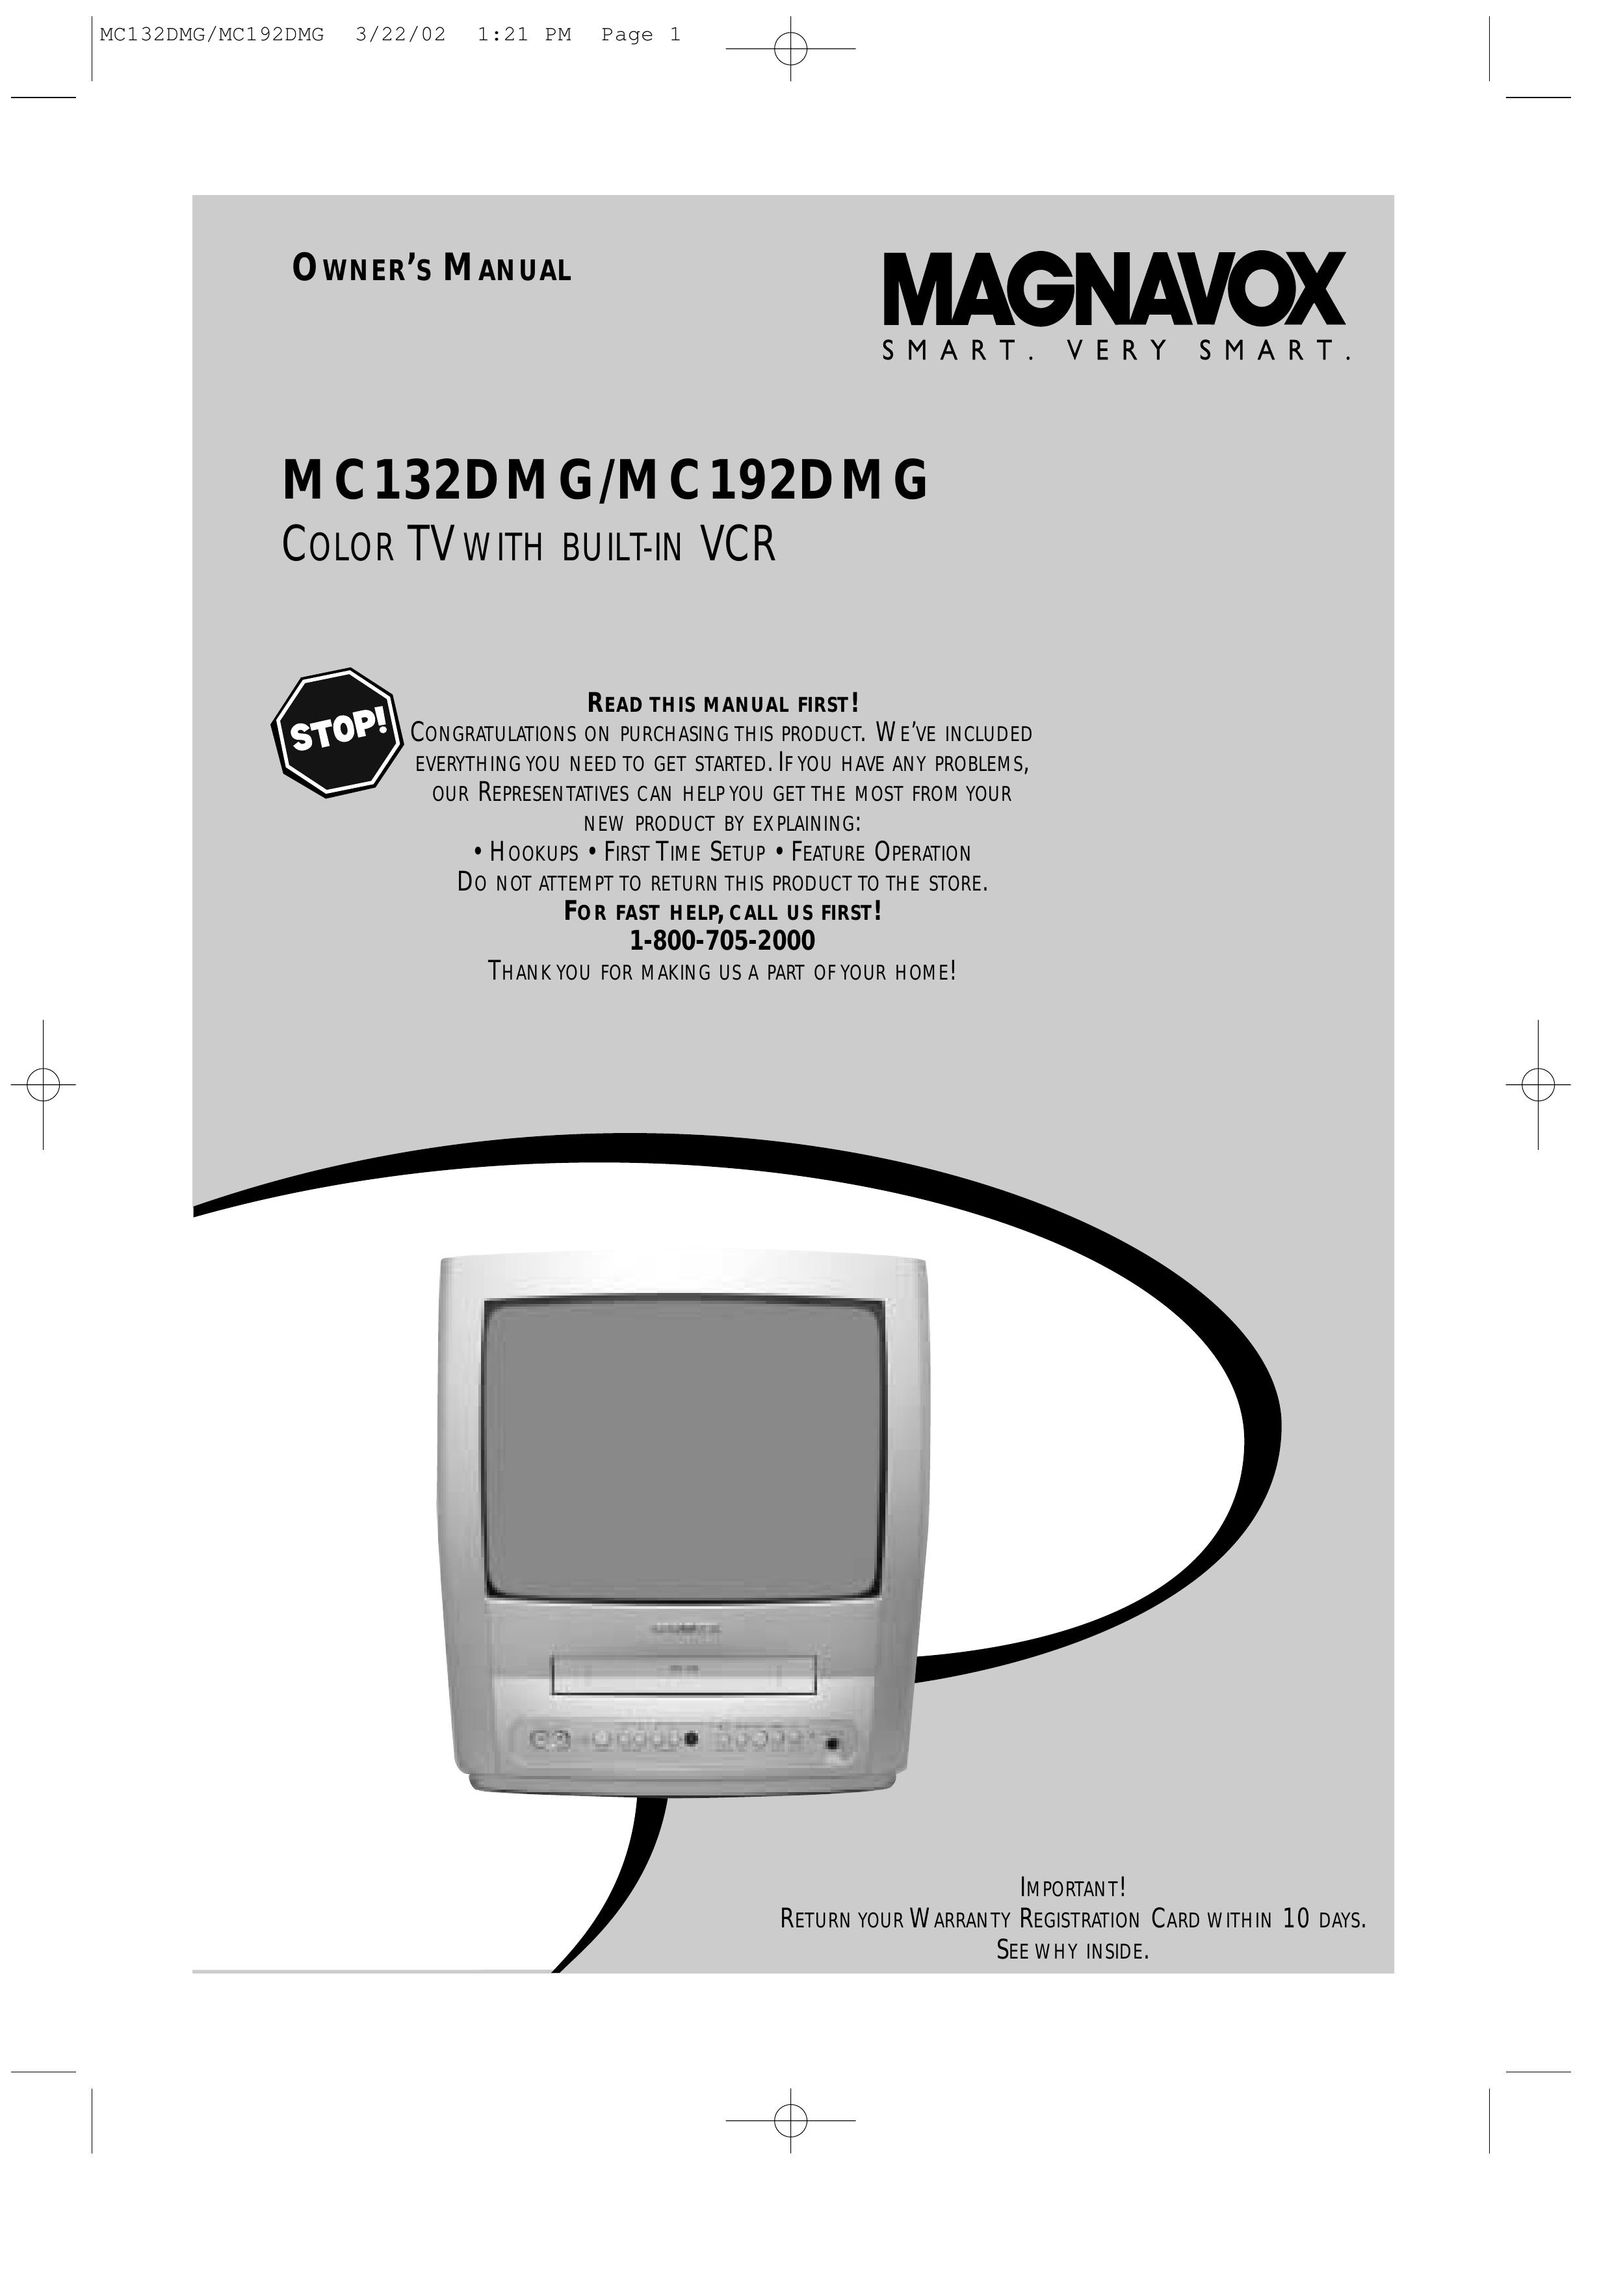 Magnavox MC192DMG TV VCR Combo User Manual